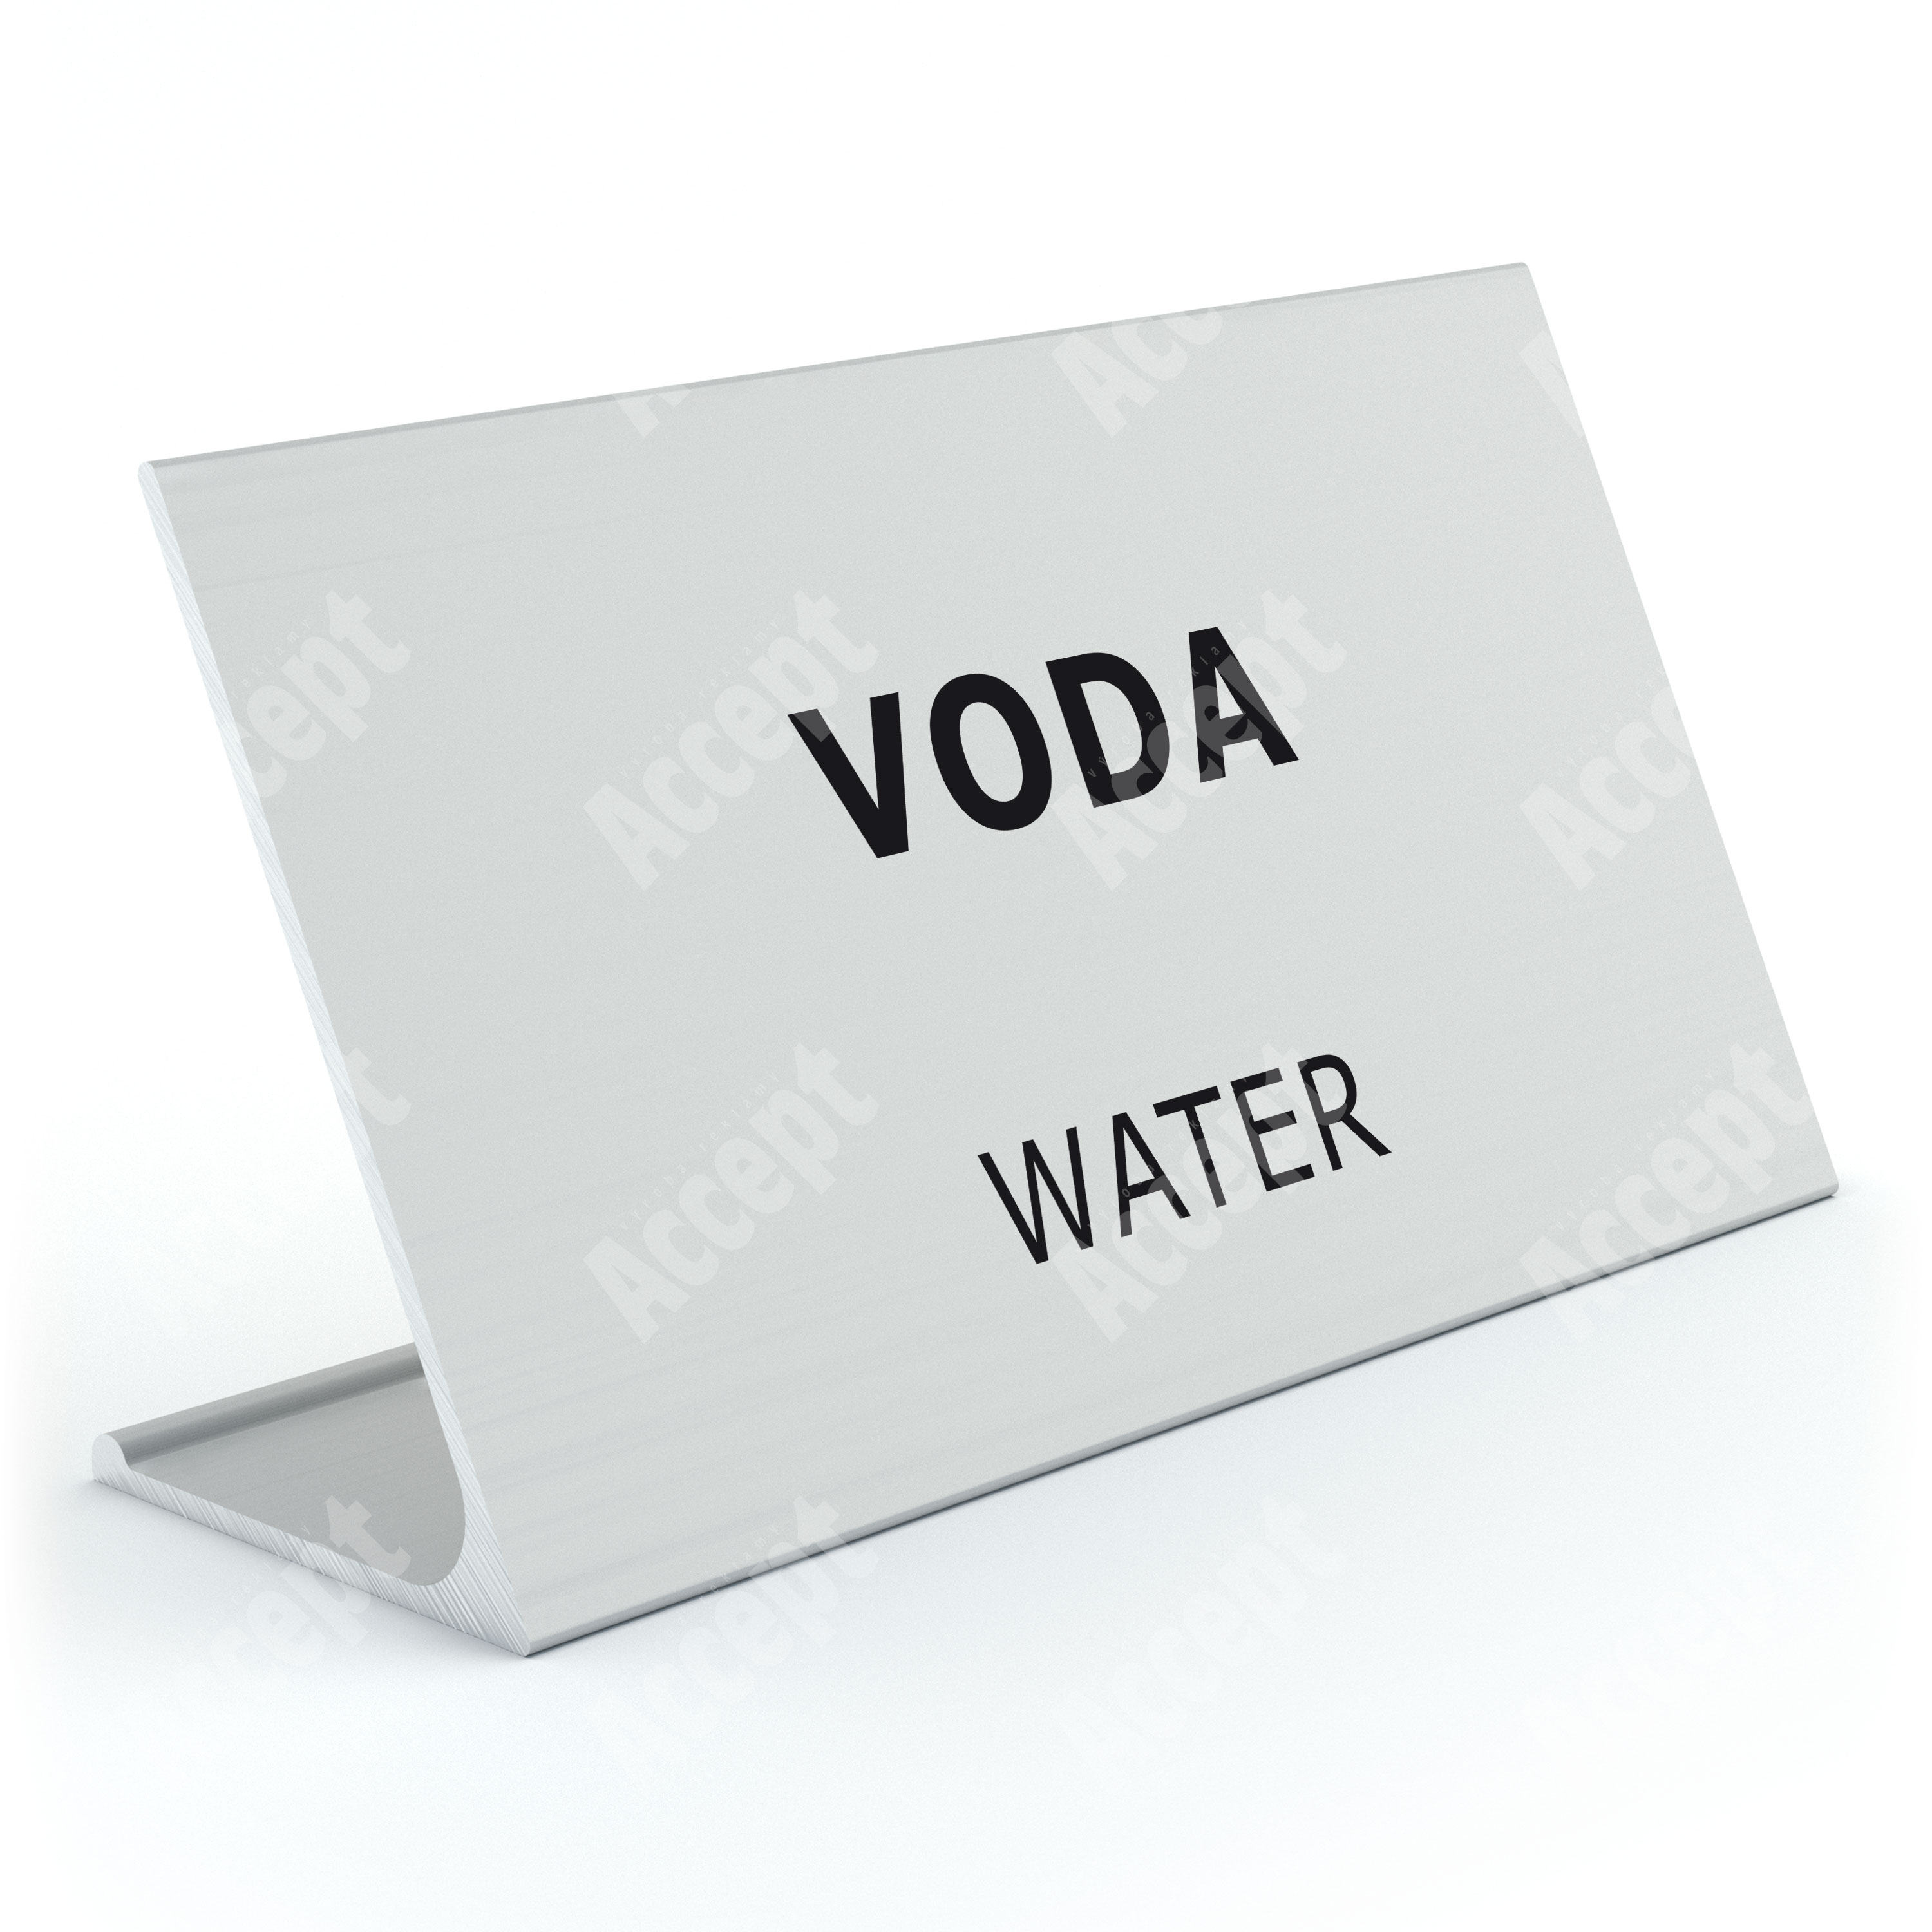 Informan stojnek D-62 "VODA, WATER"